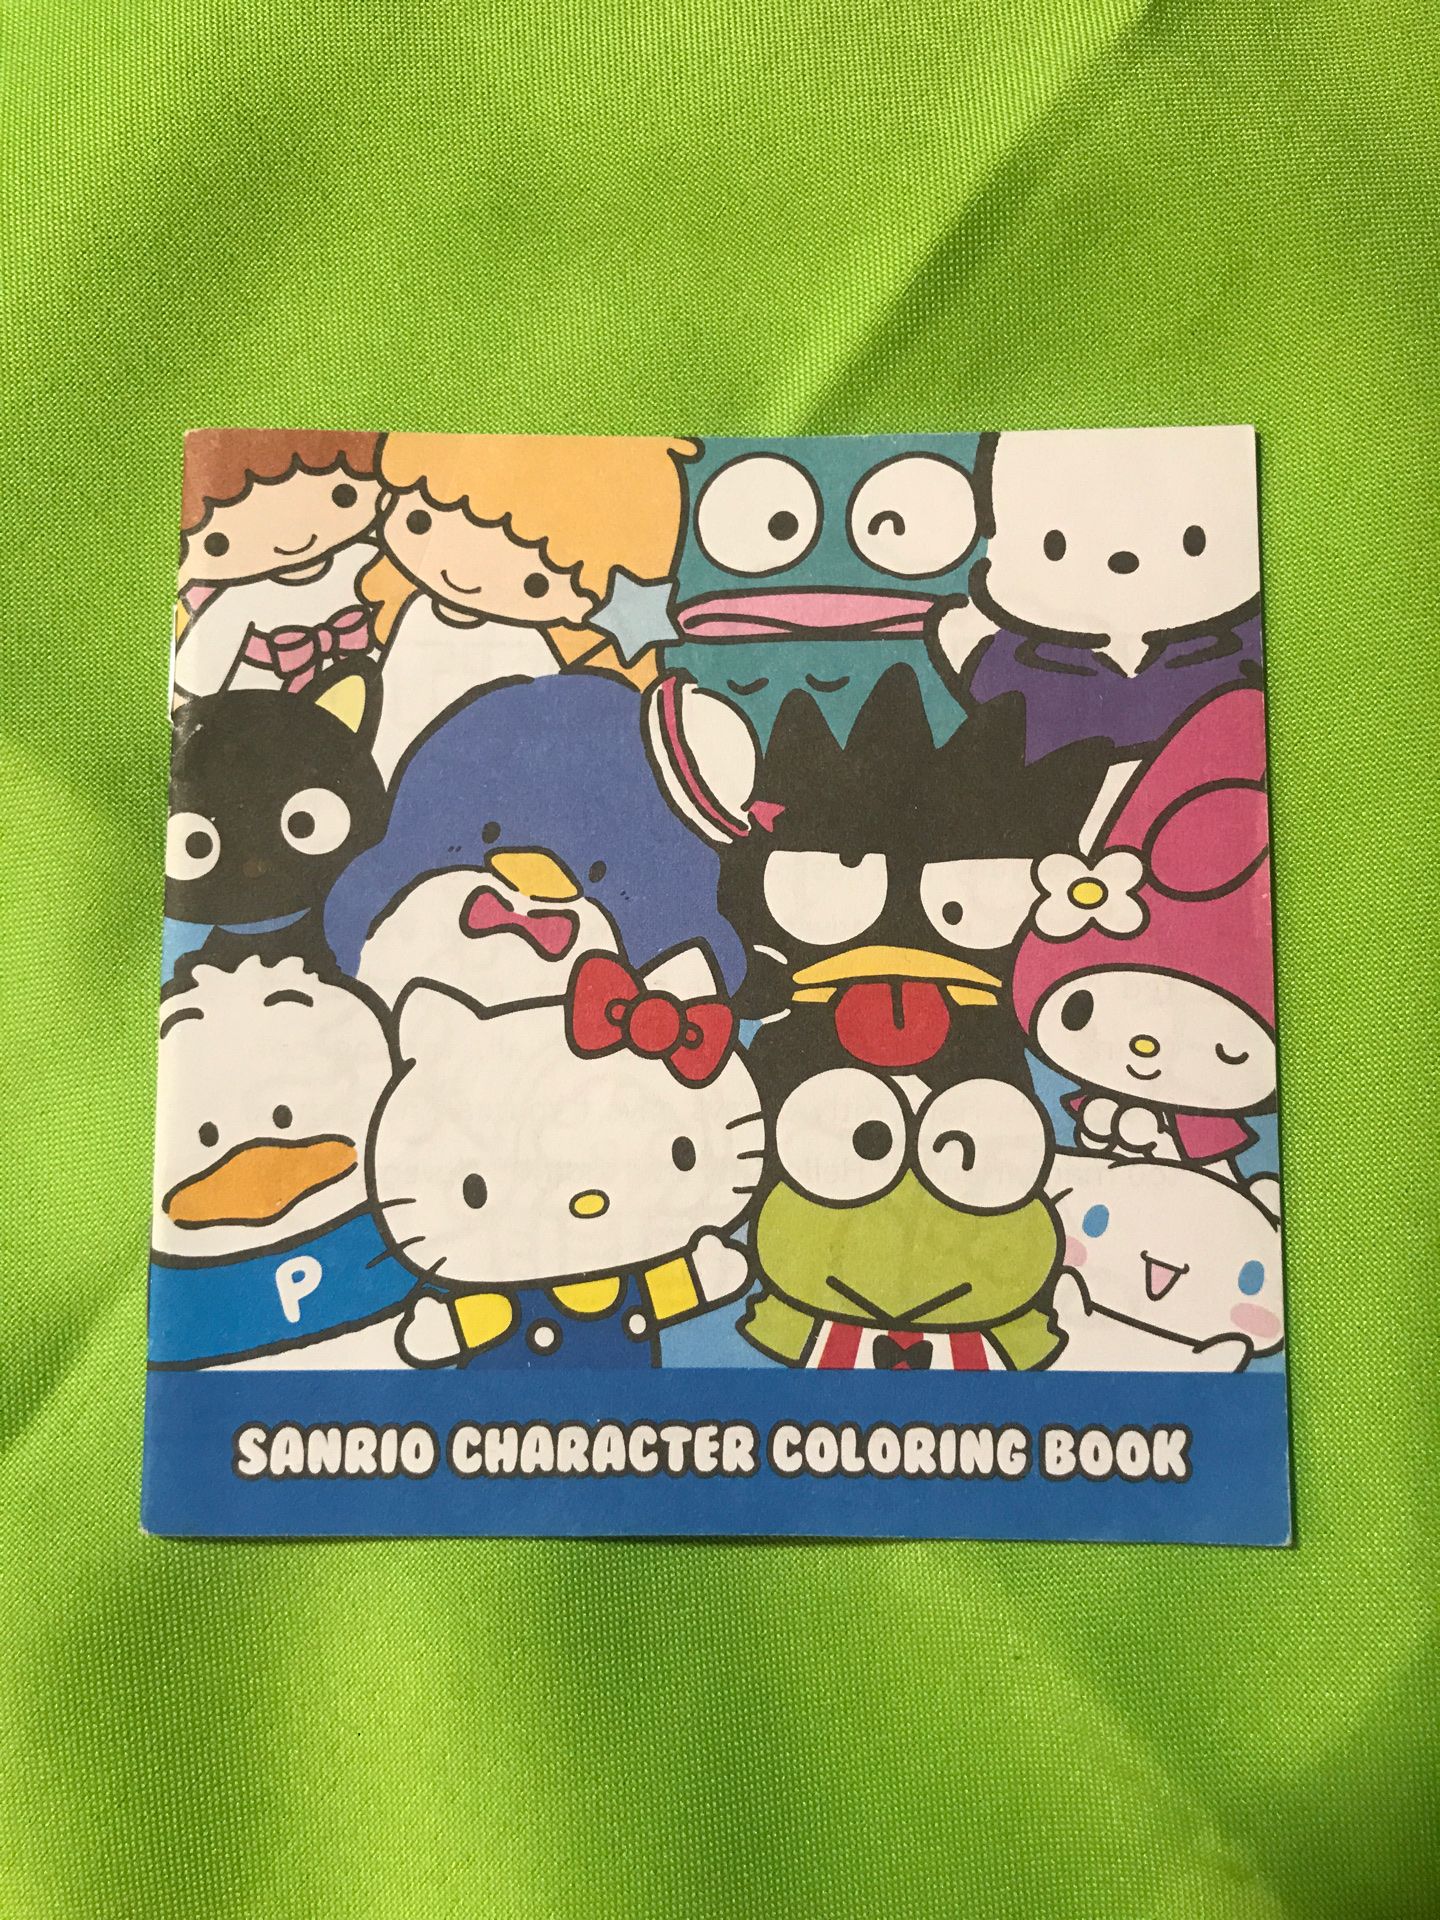 Sanrio Character Coloring Book